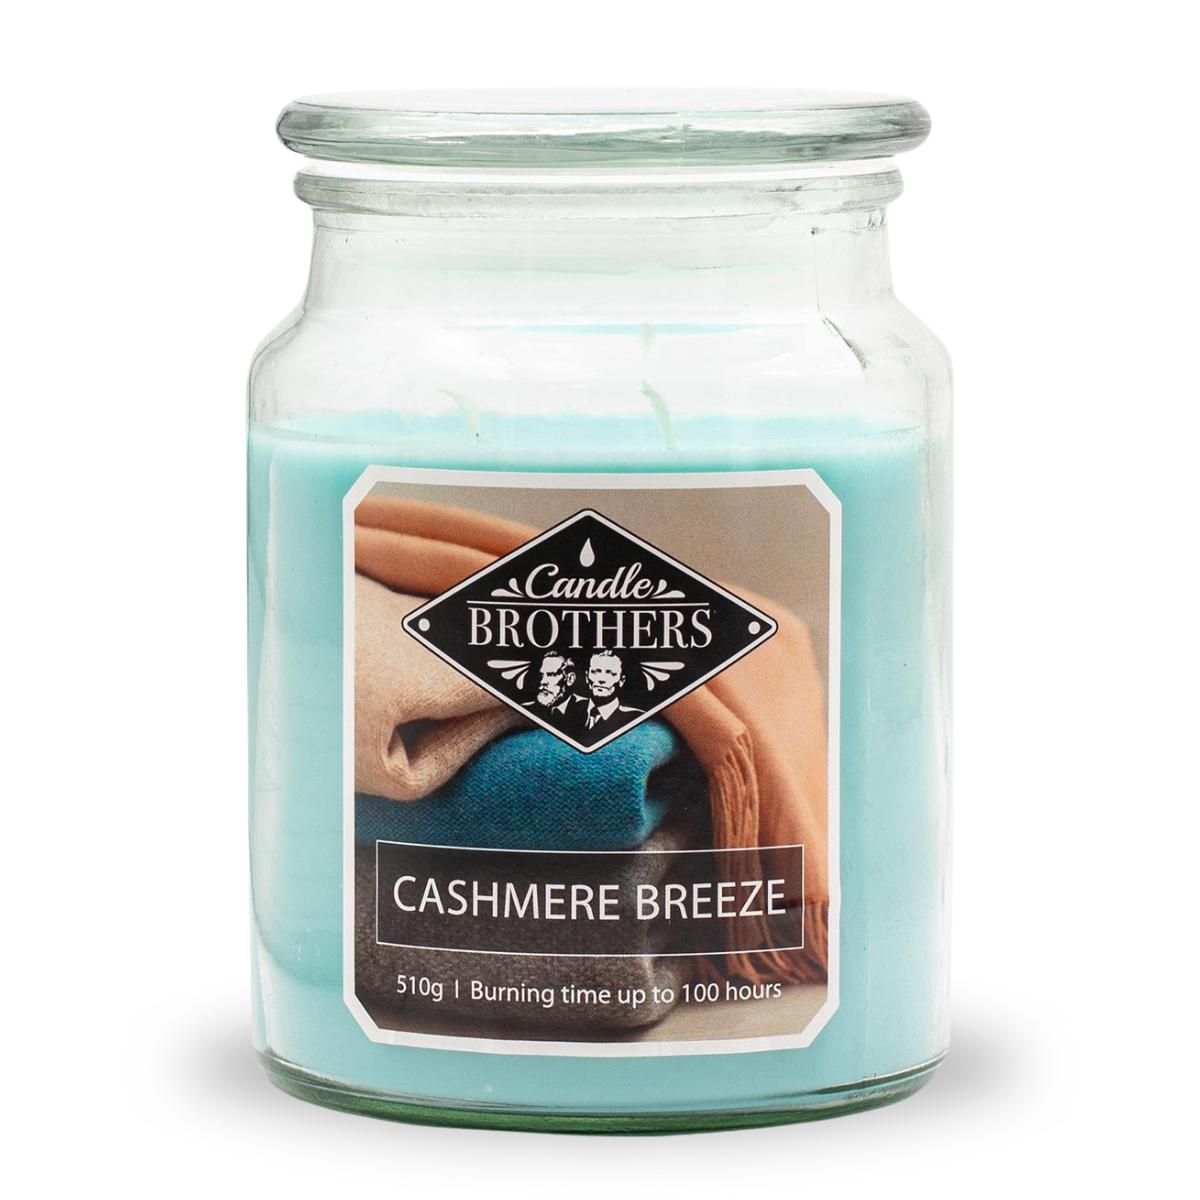 Cashmere Breeze - Duftkerze 510g von Candle Brothers